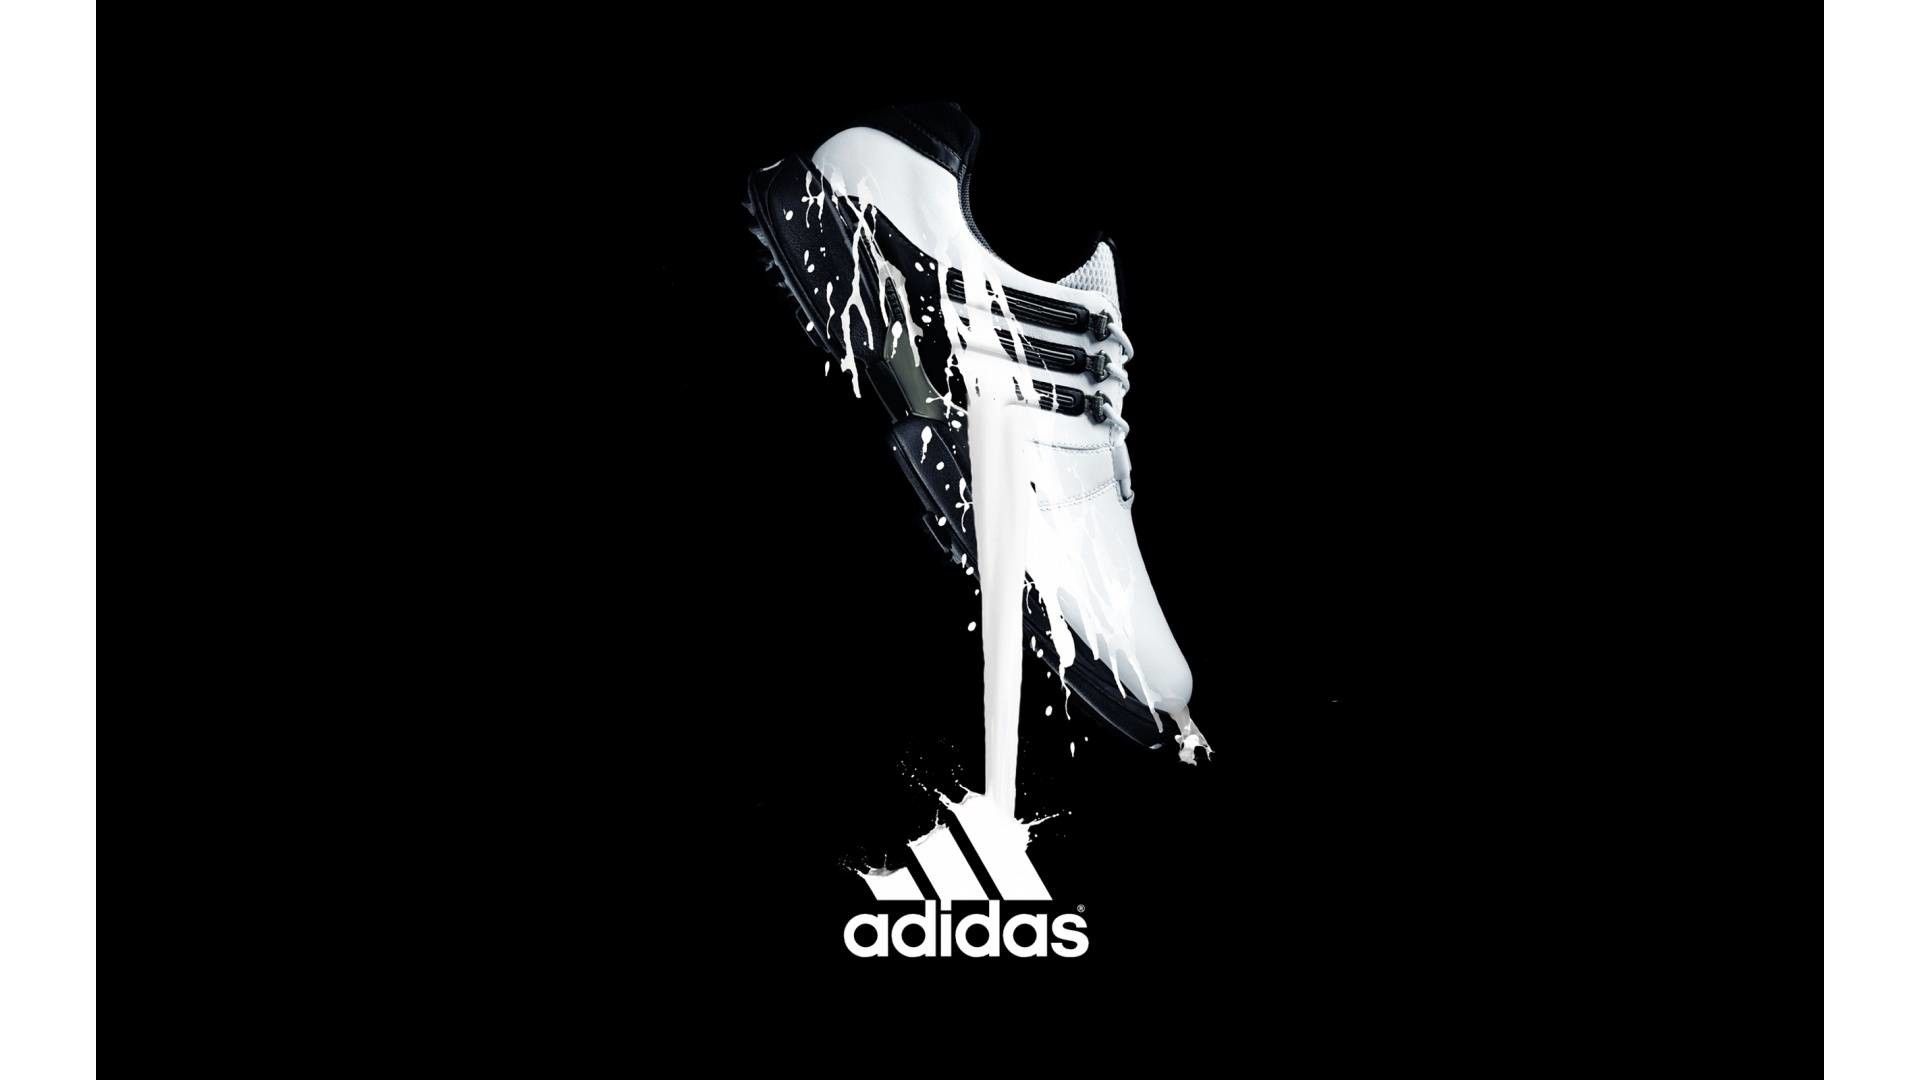 Adidas Boot Wallpaper